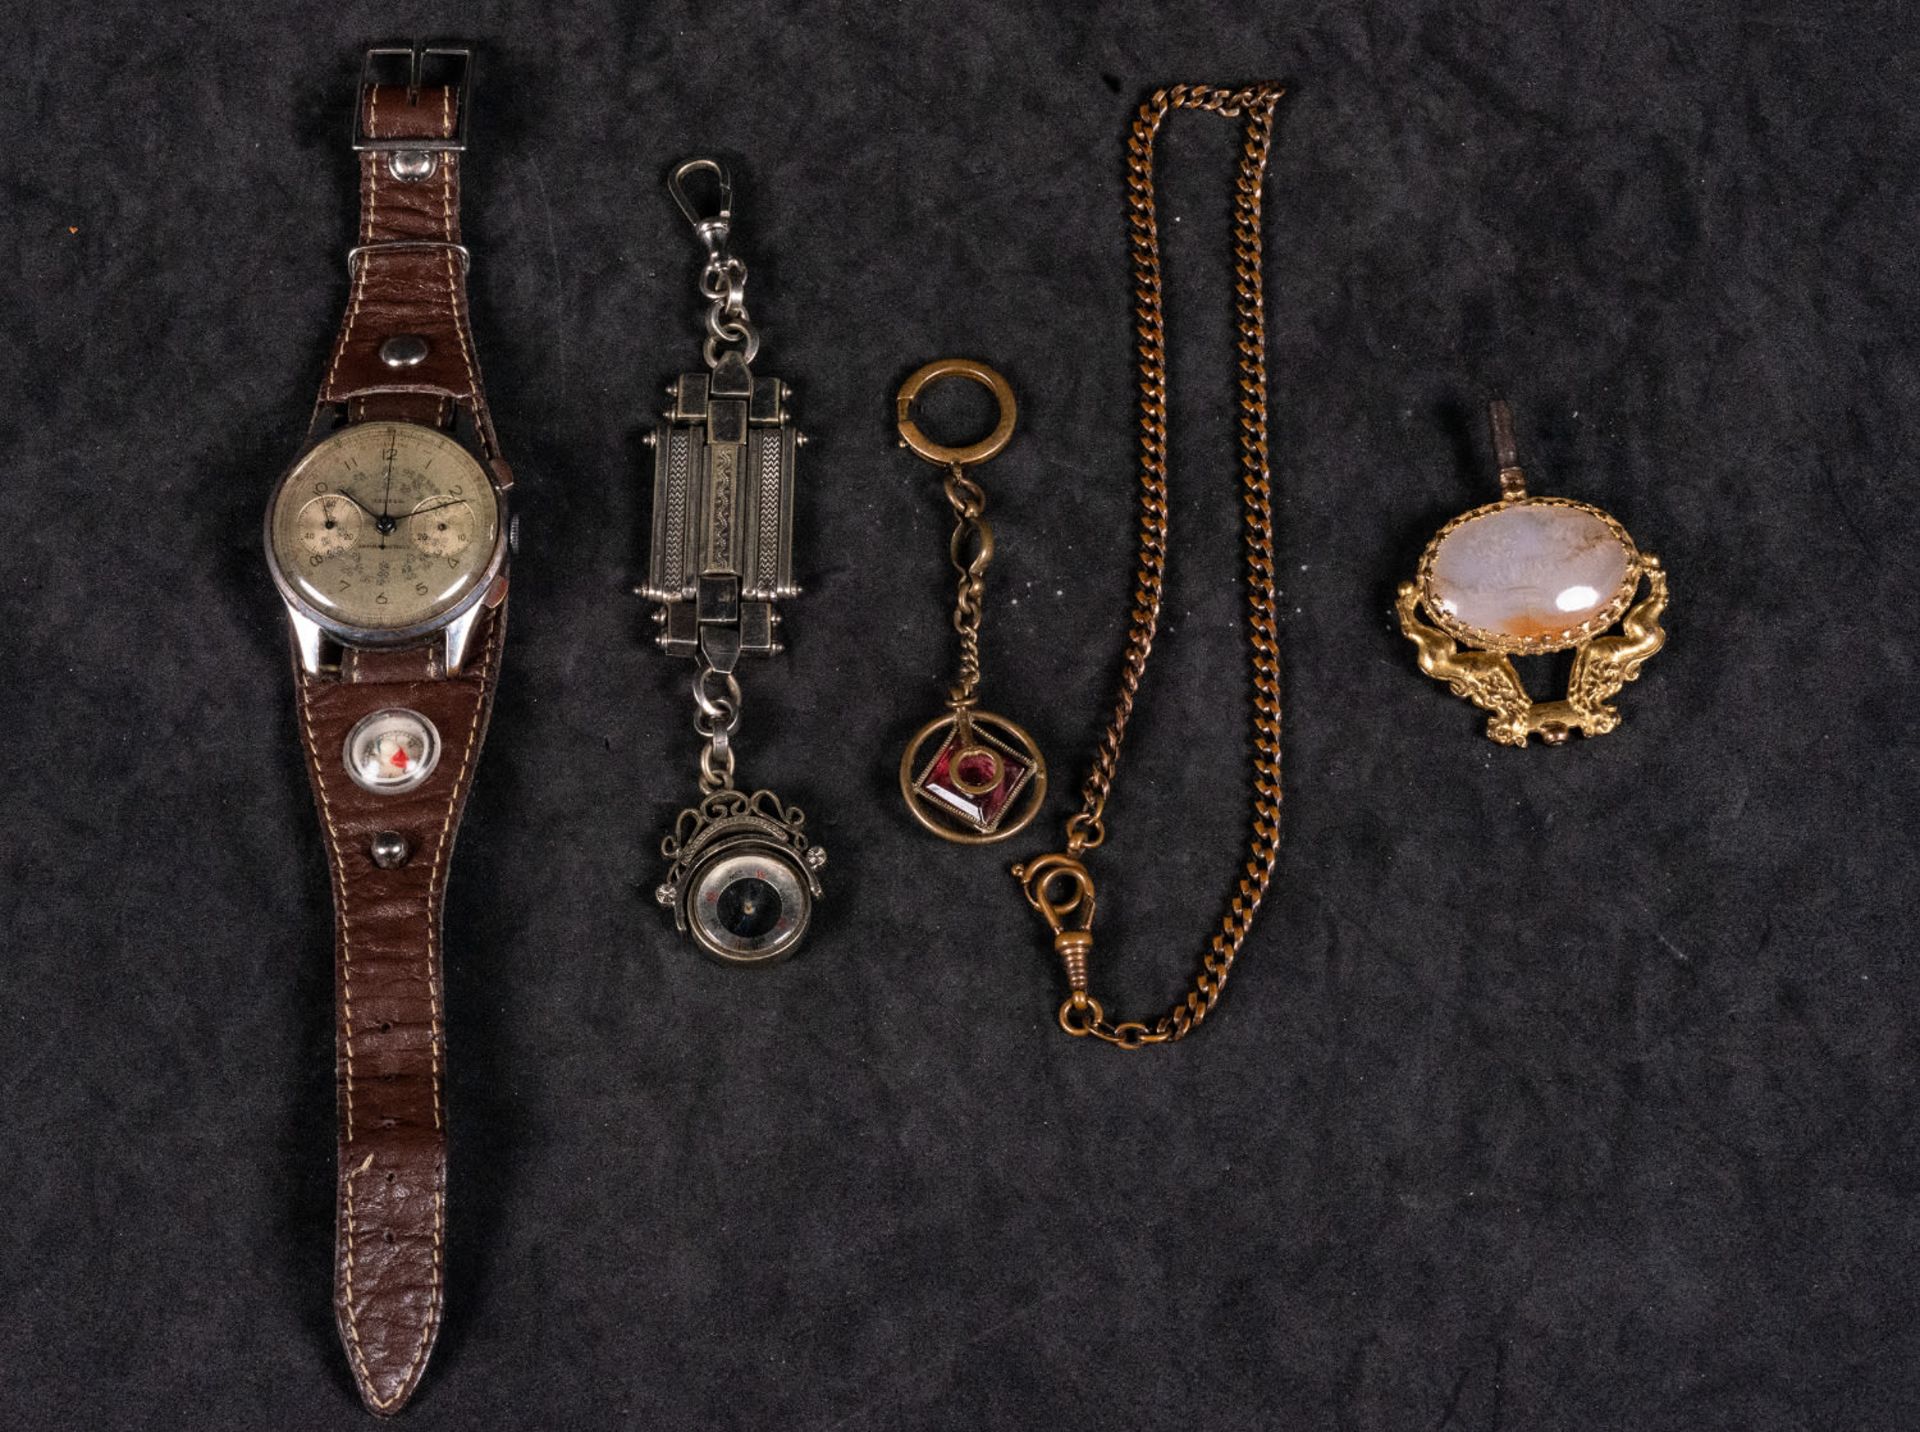 Lot 1 watch + vintage accessories 20th century